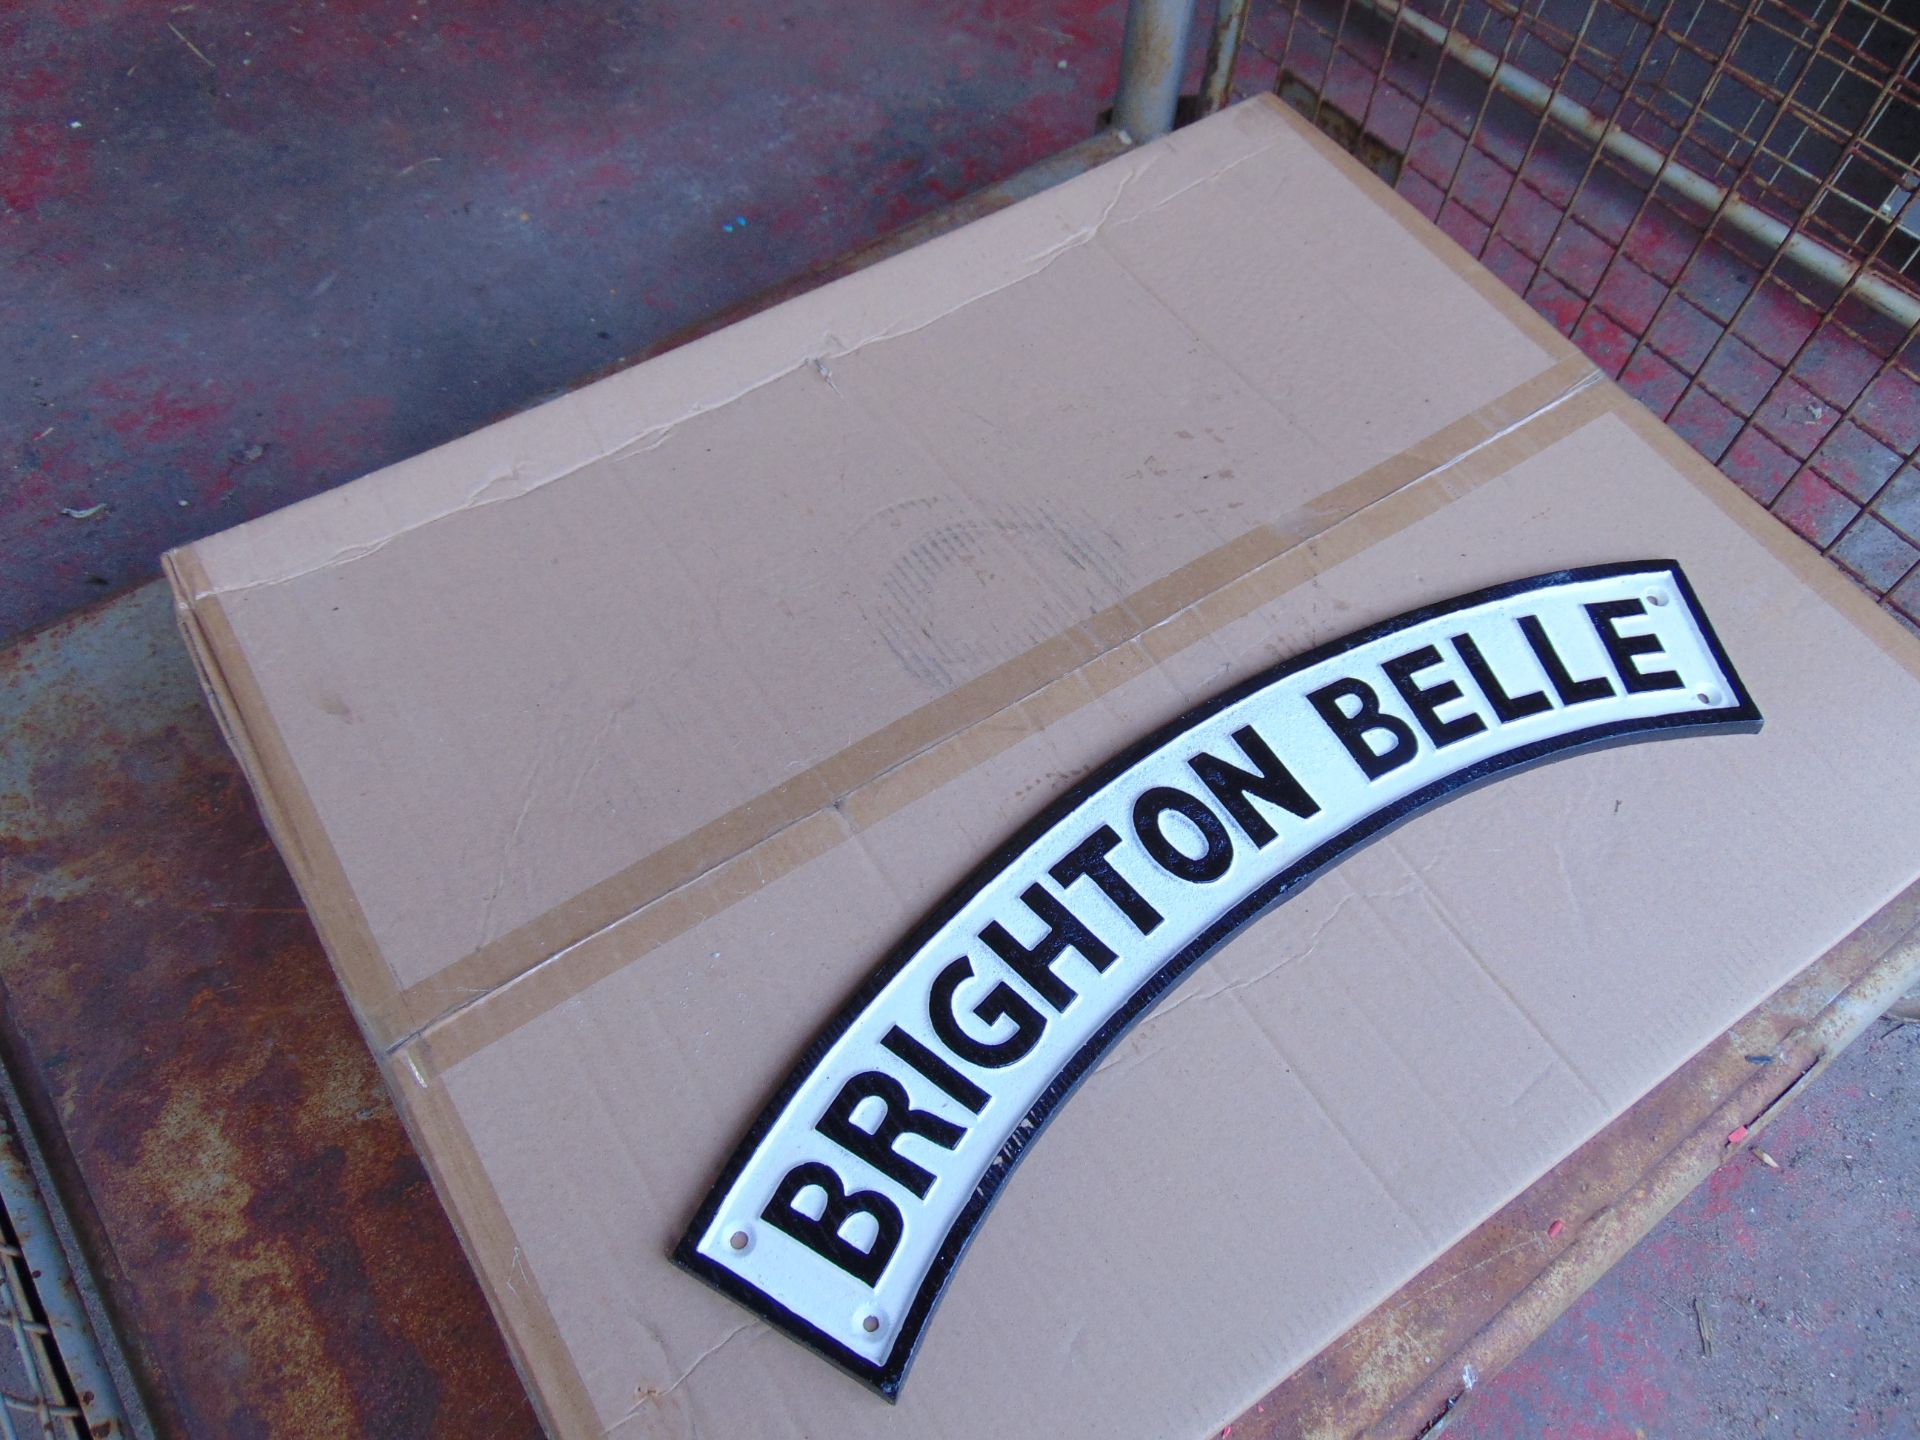 Brighton Belle Cast Iron Railway Train Name Plaque - Image 2 of 3